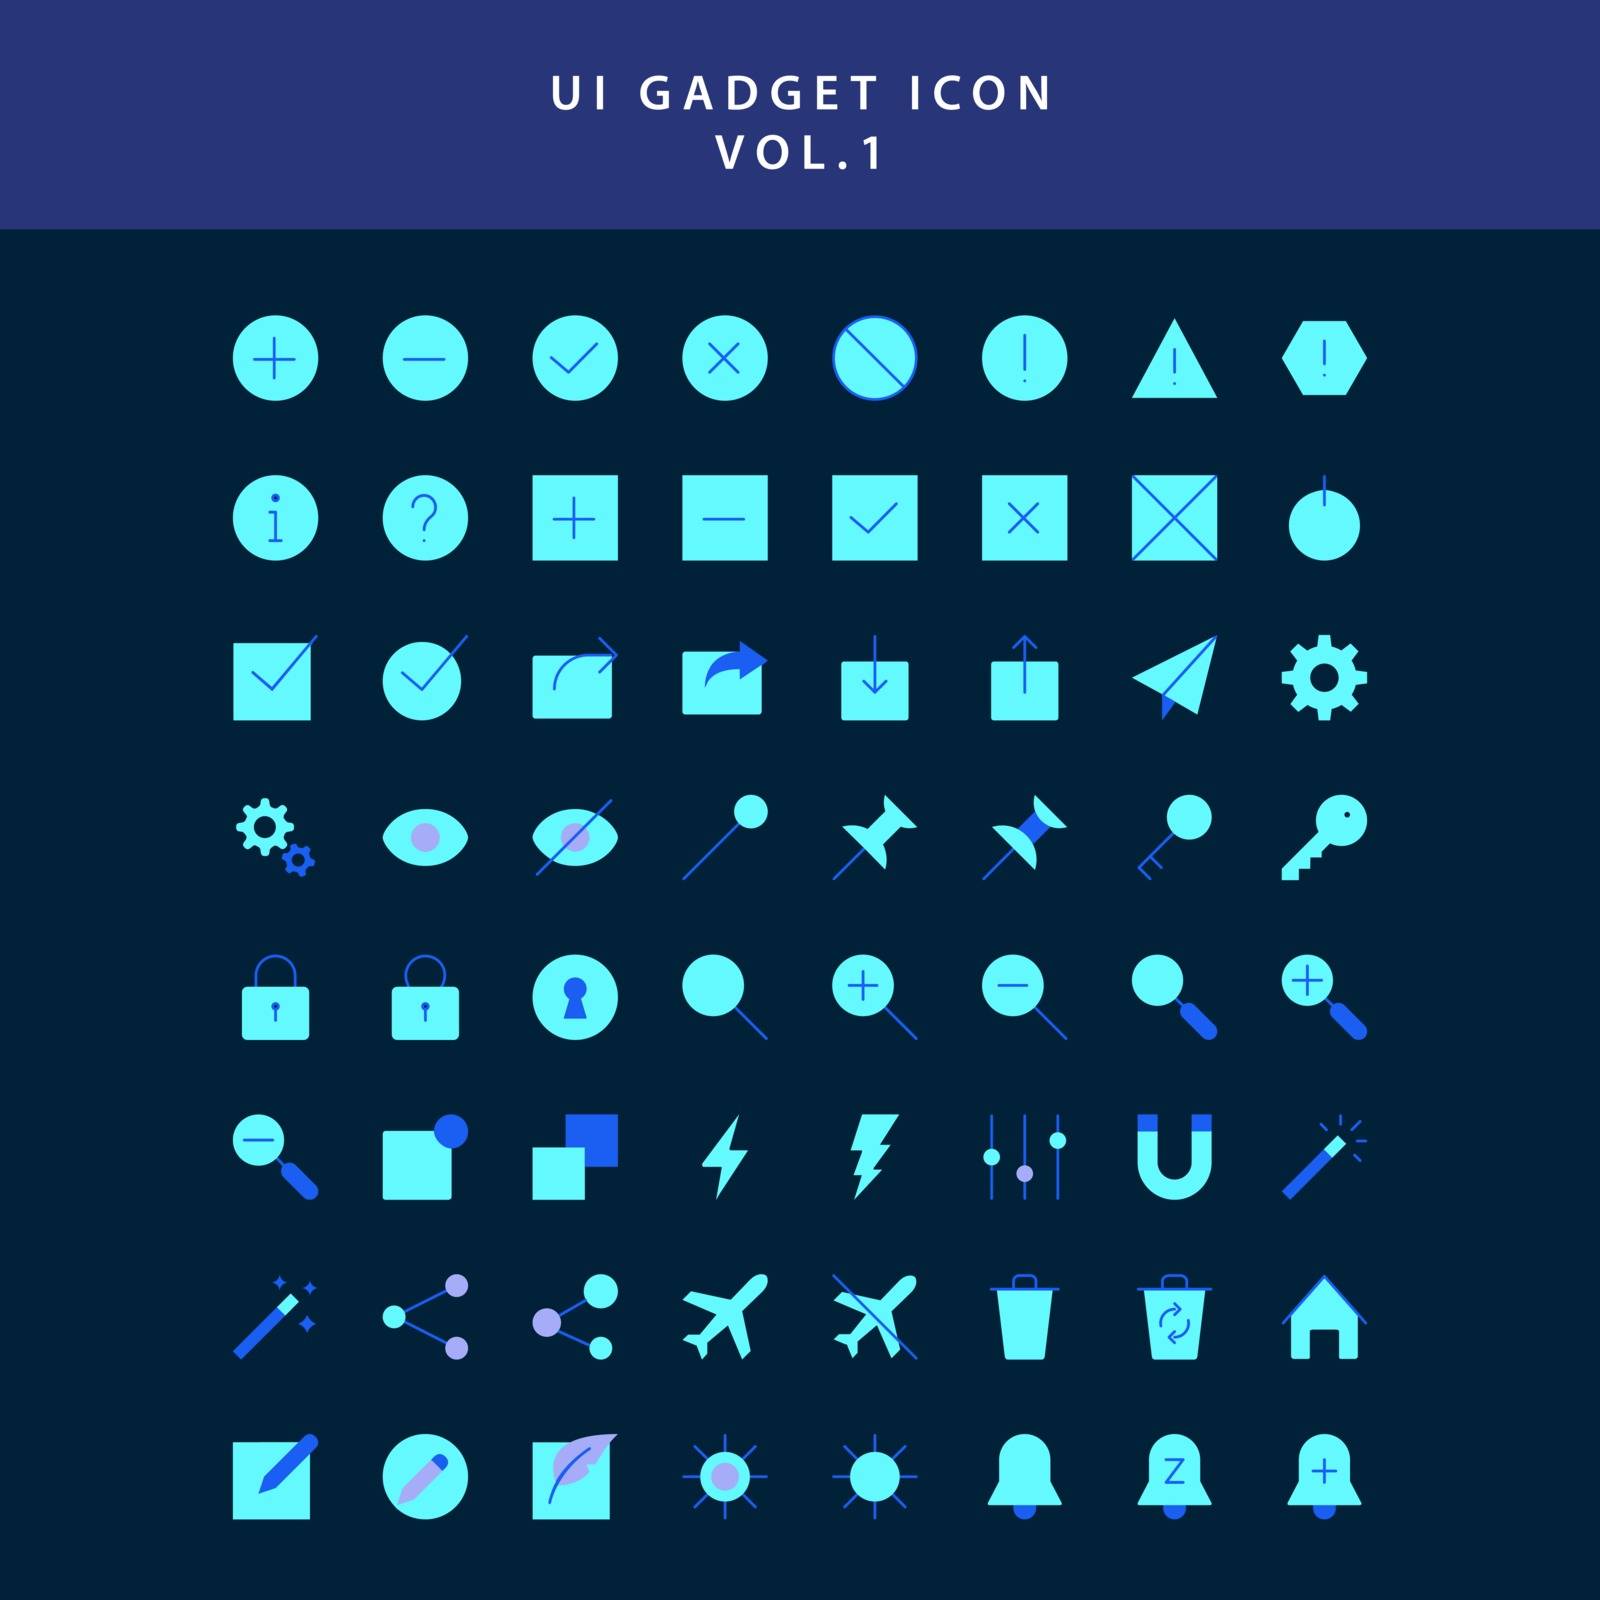 ui gadget icon set flat style design vol 1 by ANITA